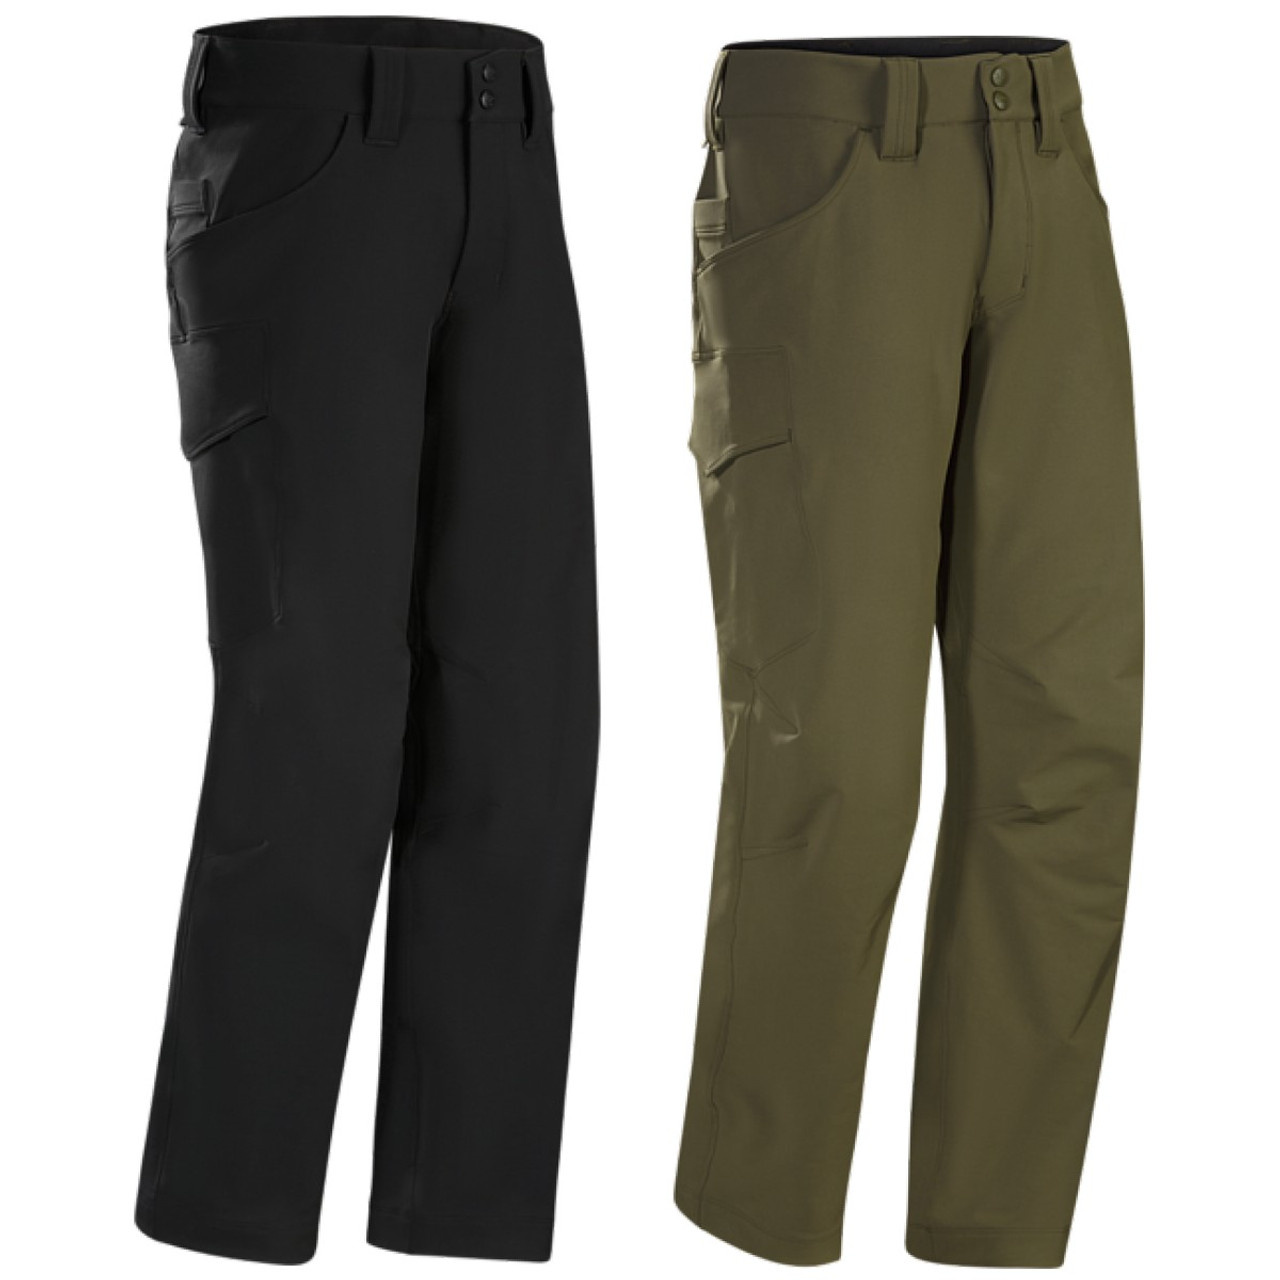 EPTM Waterproof Tactical Pants